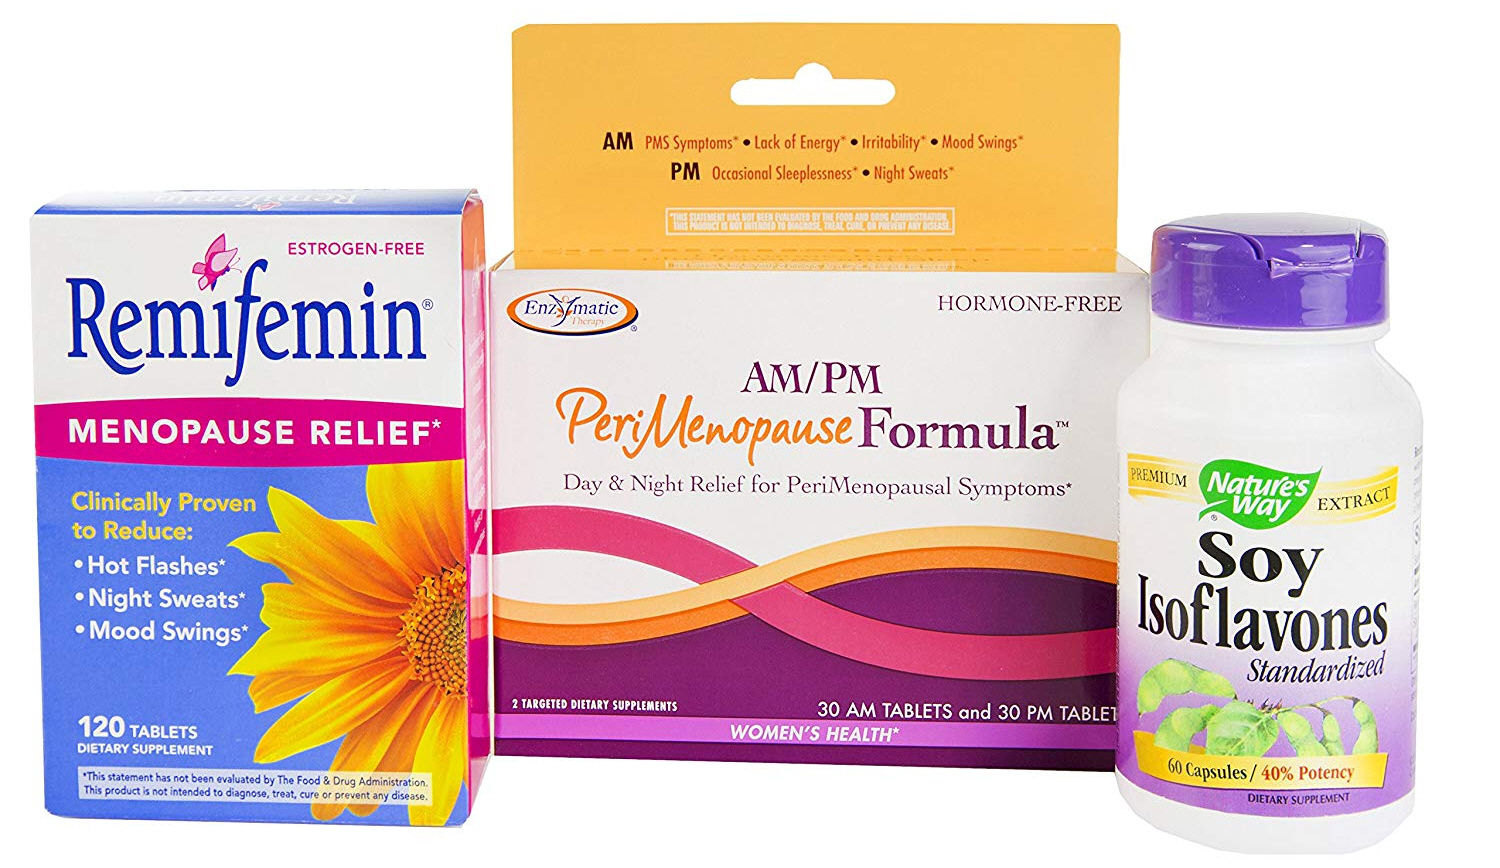 Am pm menopause formula integrative therapeutics